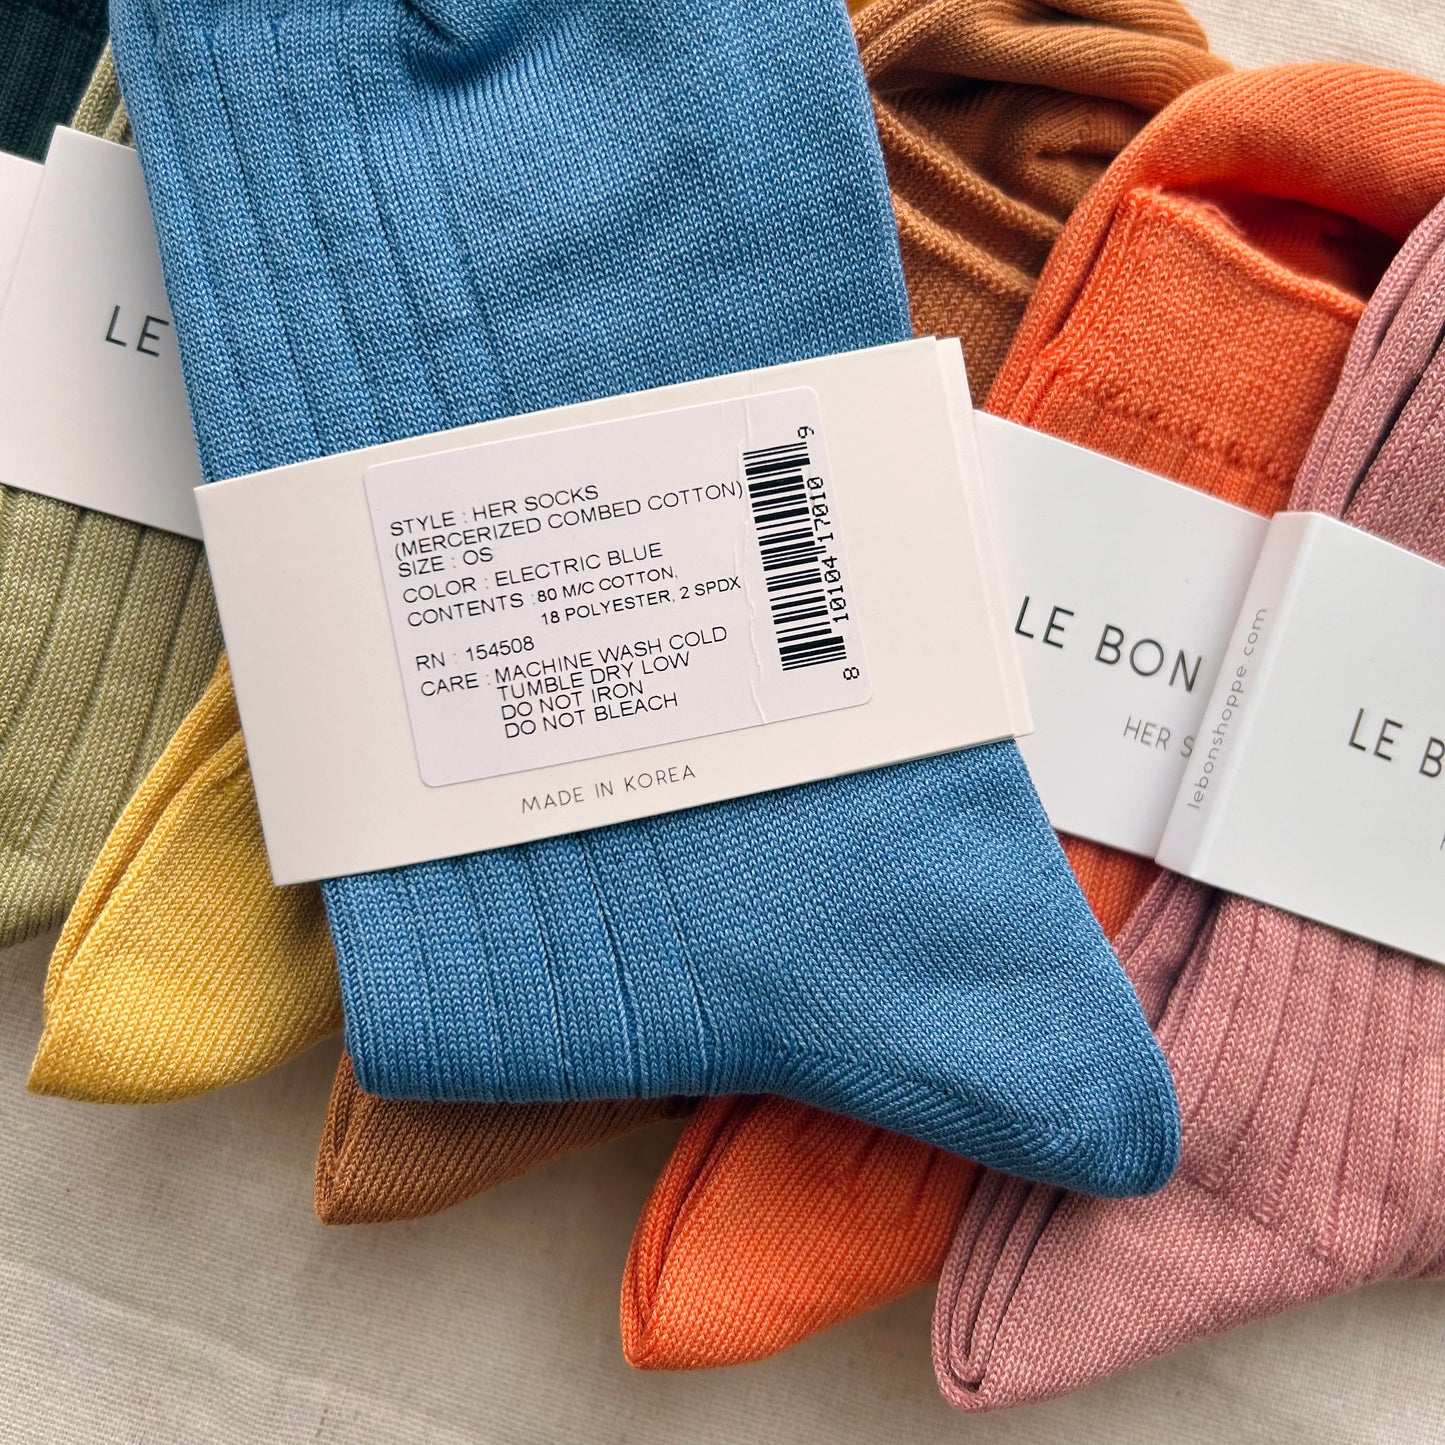 Le Bon Shoppe Combed Cotton Socks